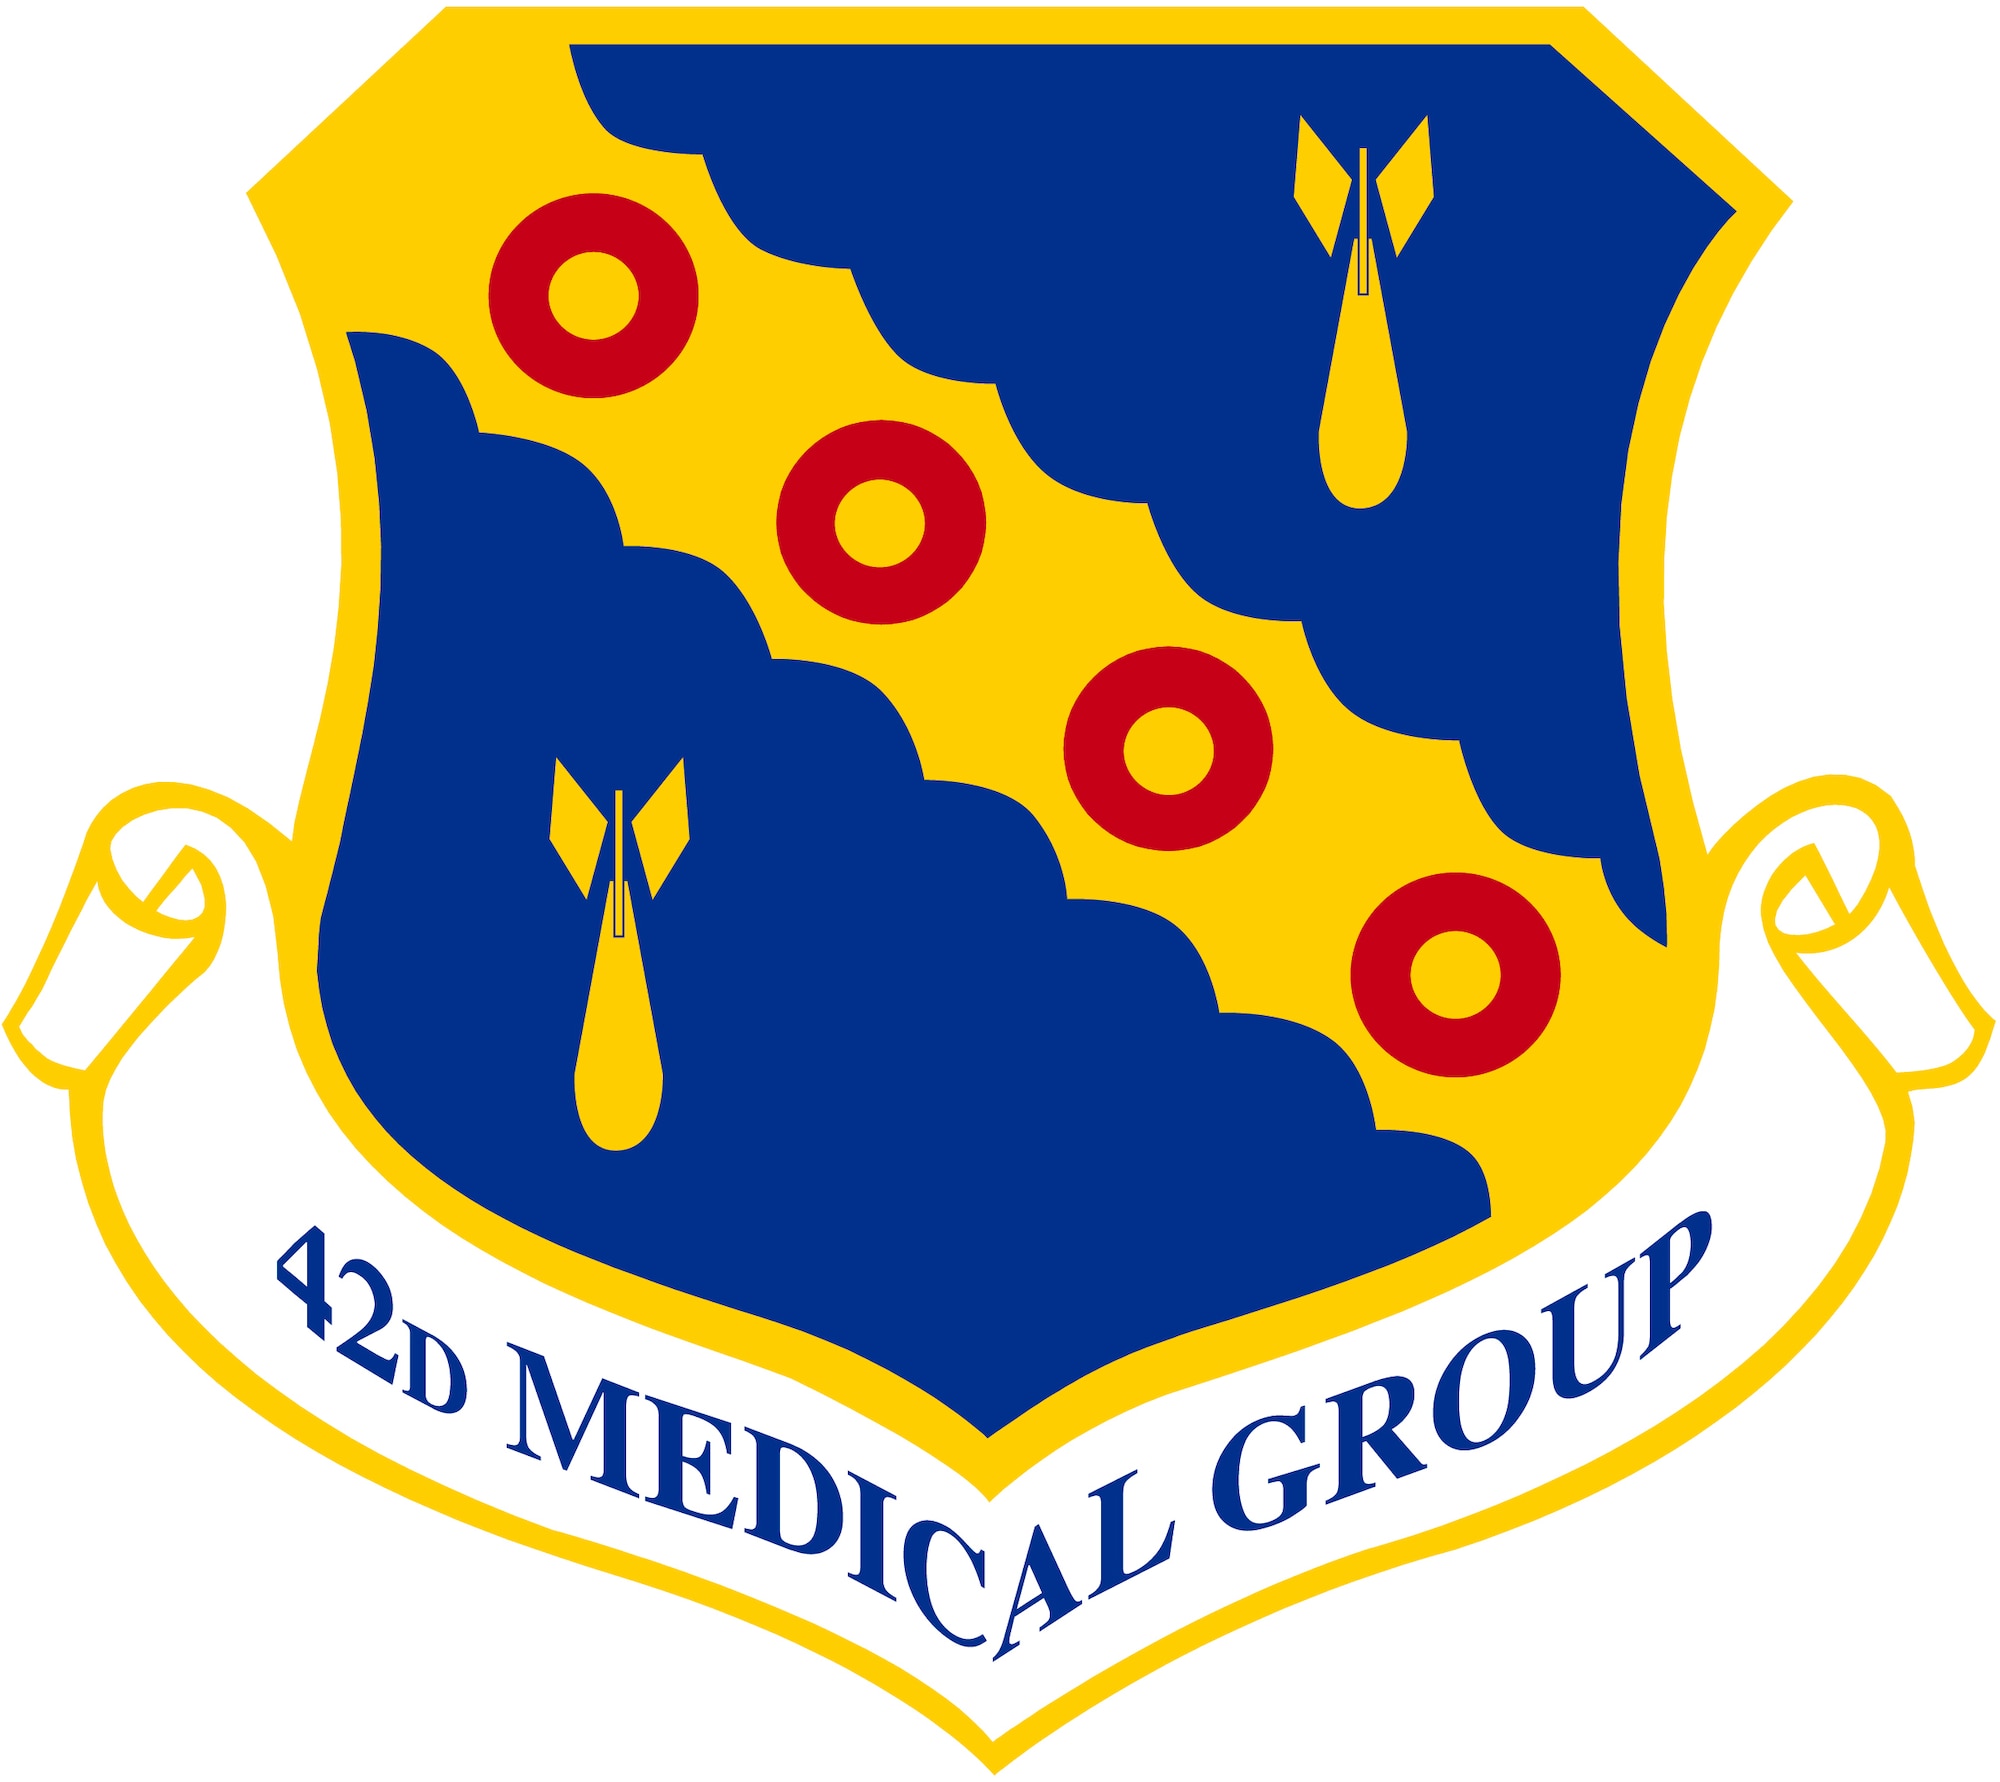 42nd Medical Group shield